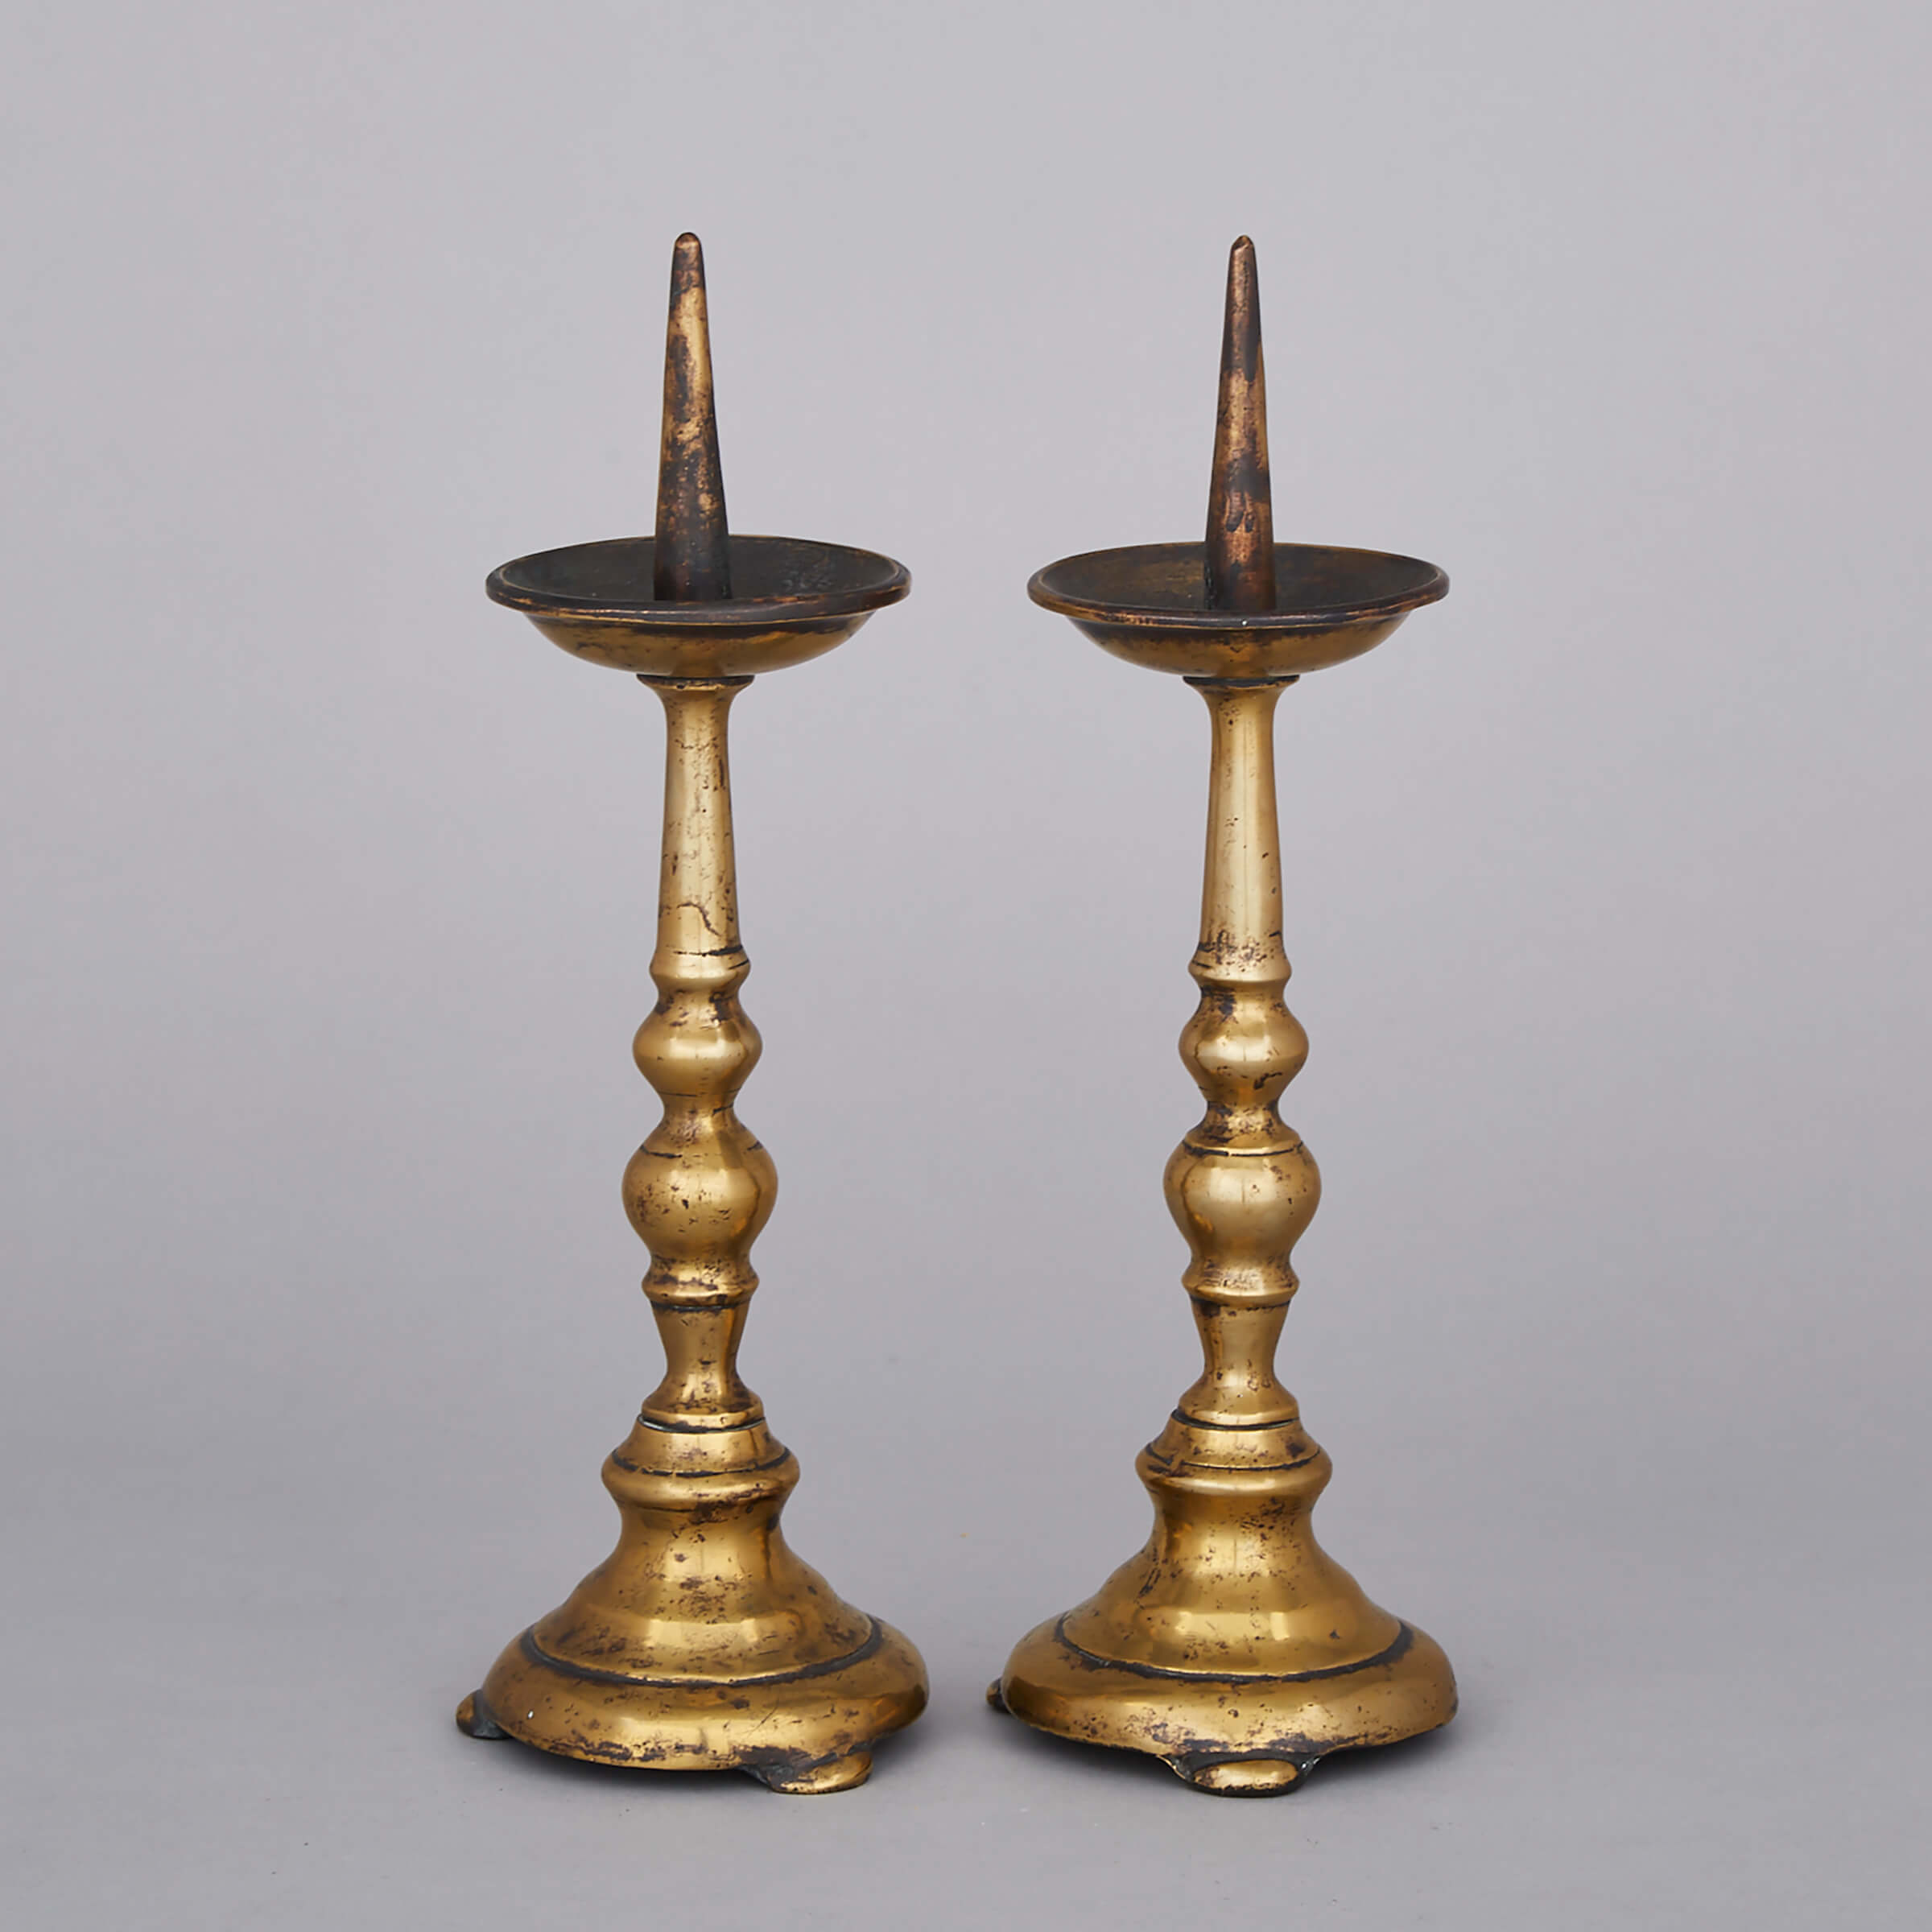 Pair of Continental Brass Pricket Candlesticks, 17th century